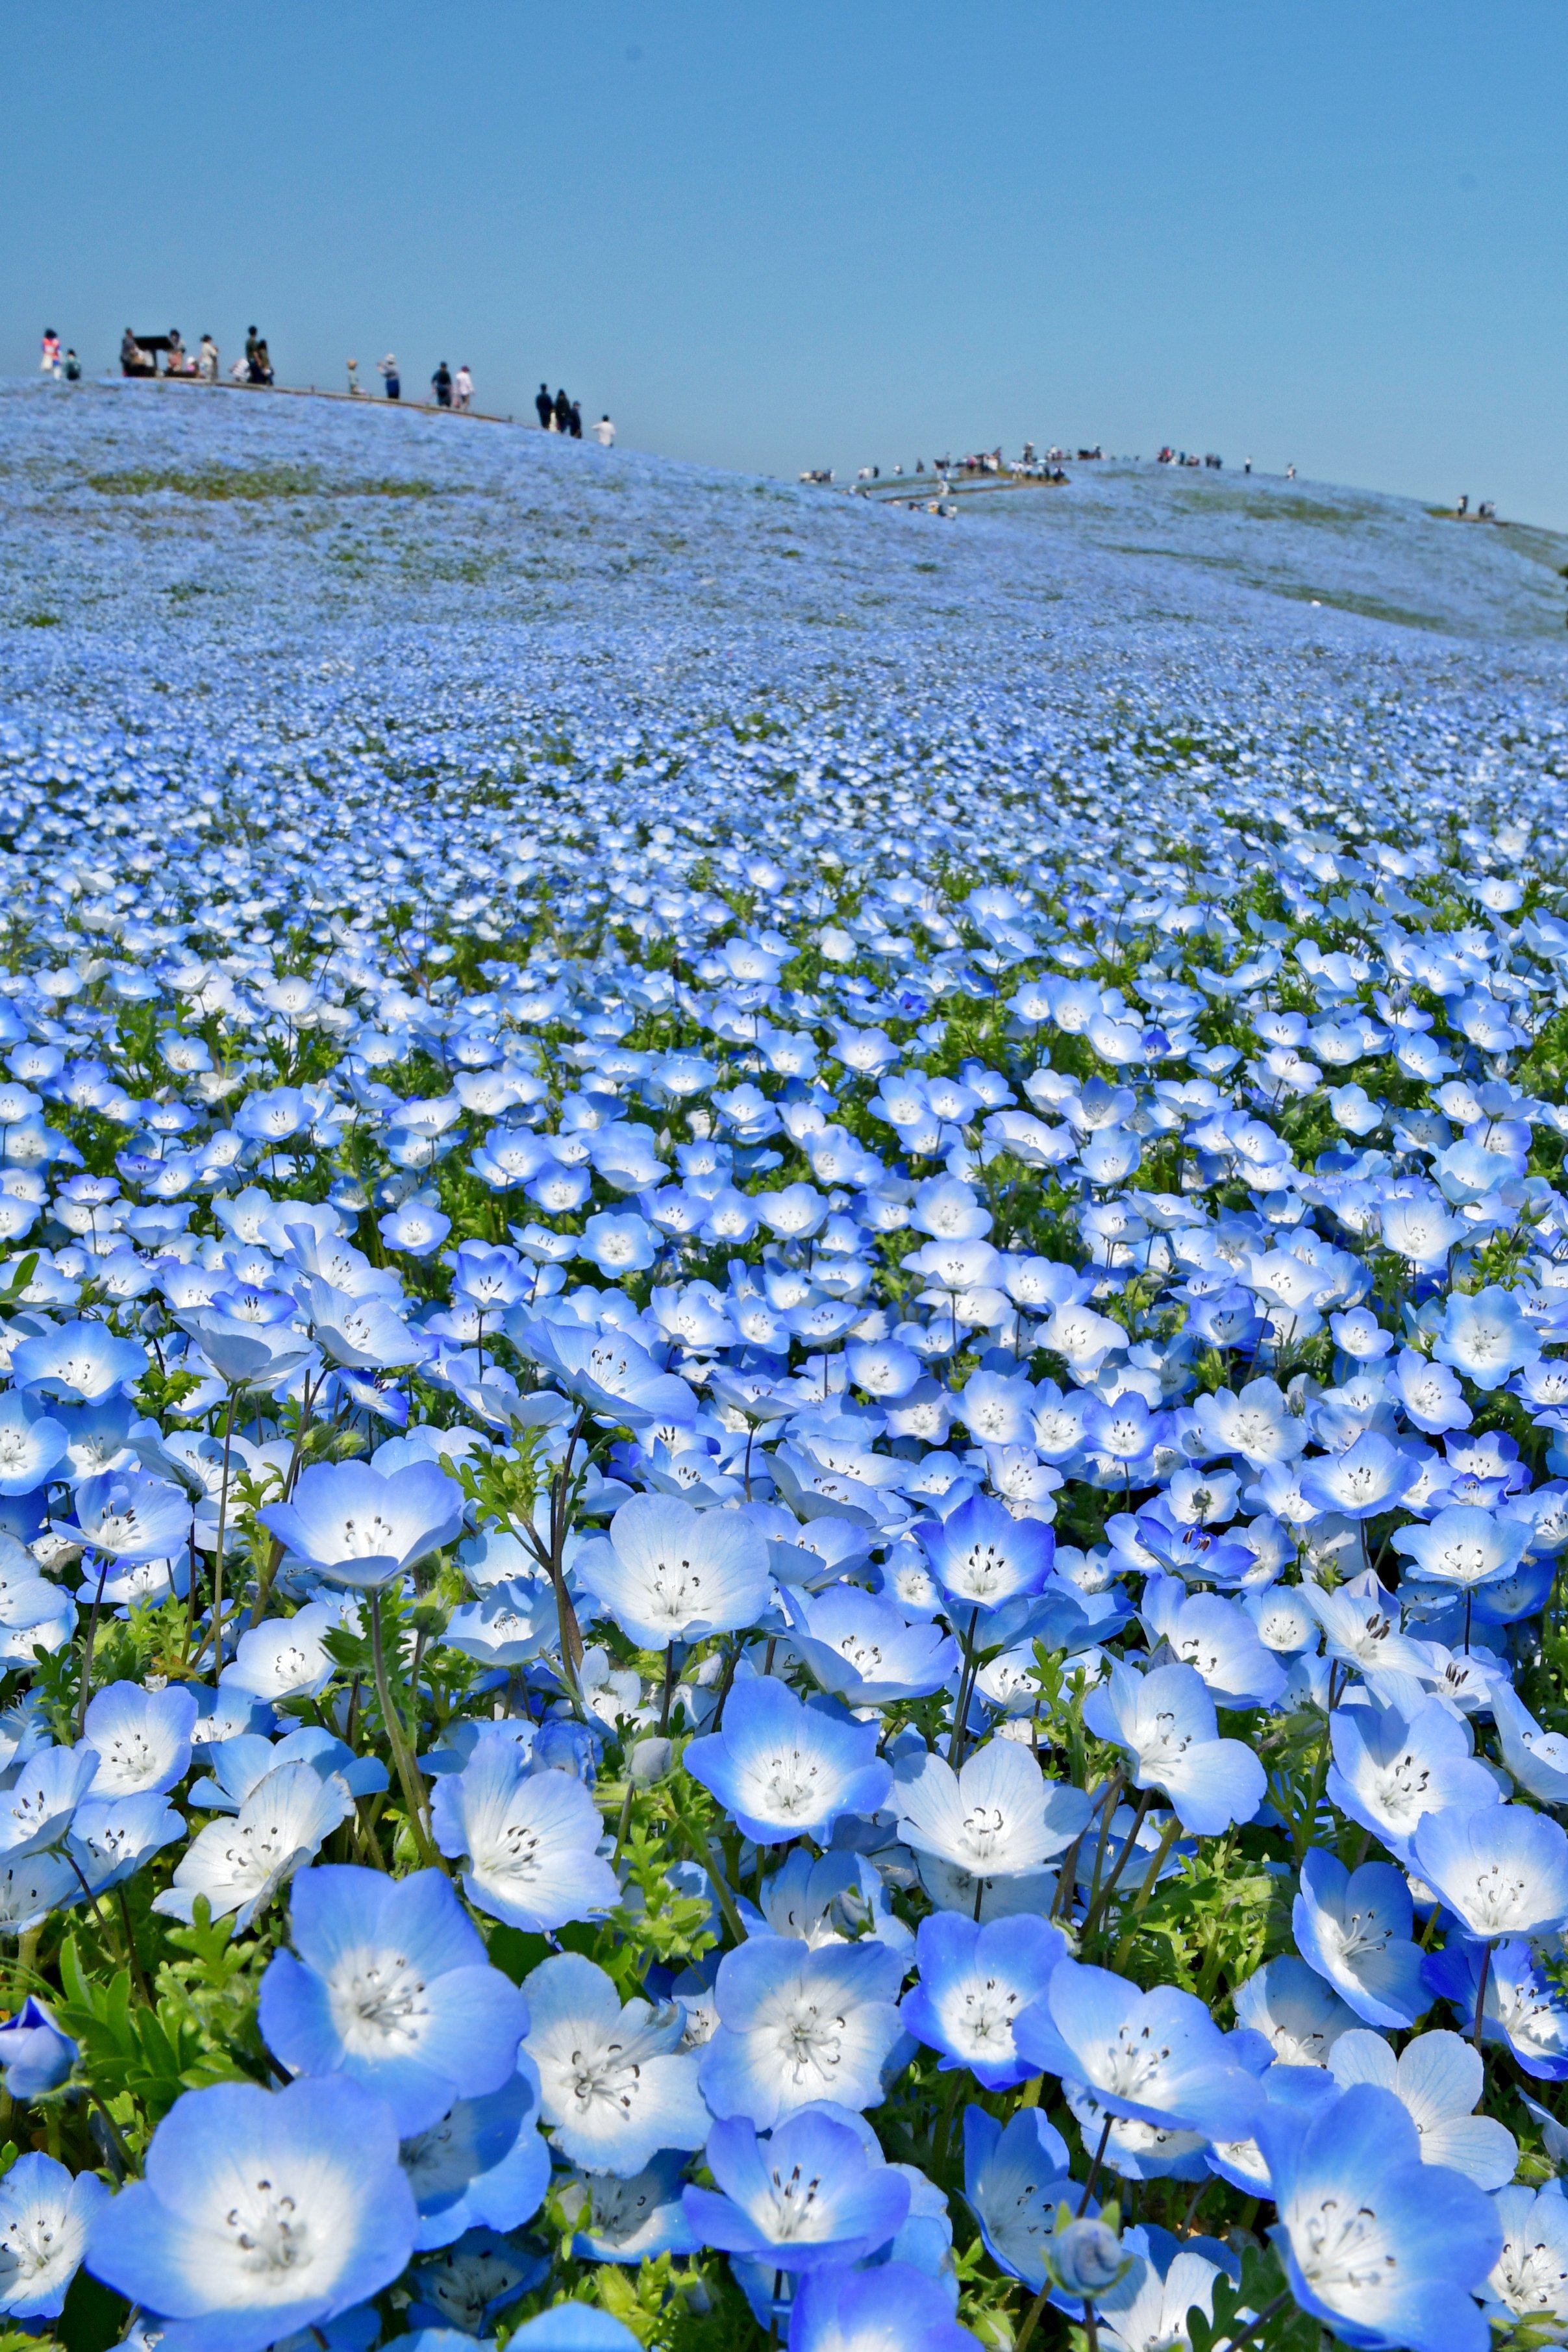 Twitter 上的 国営ひたち海浜公園 公式 ネモフィラの花の大きさは約2 3cmほど 小さな花が集まって丘一面を青く染め 空と溶け合う風景を作り出します みはらしの丘のネモフィラは 現在 見頃 です ひたち海浜公園 Hitachiseasidepark ネモフィラ